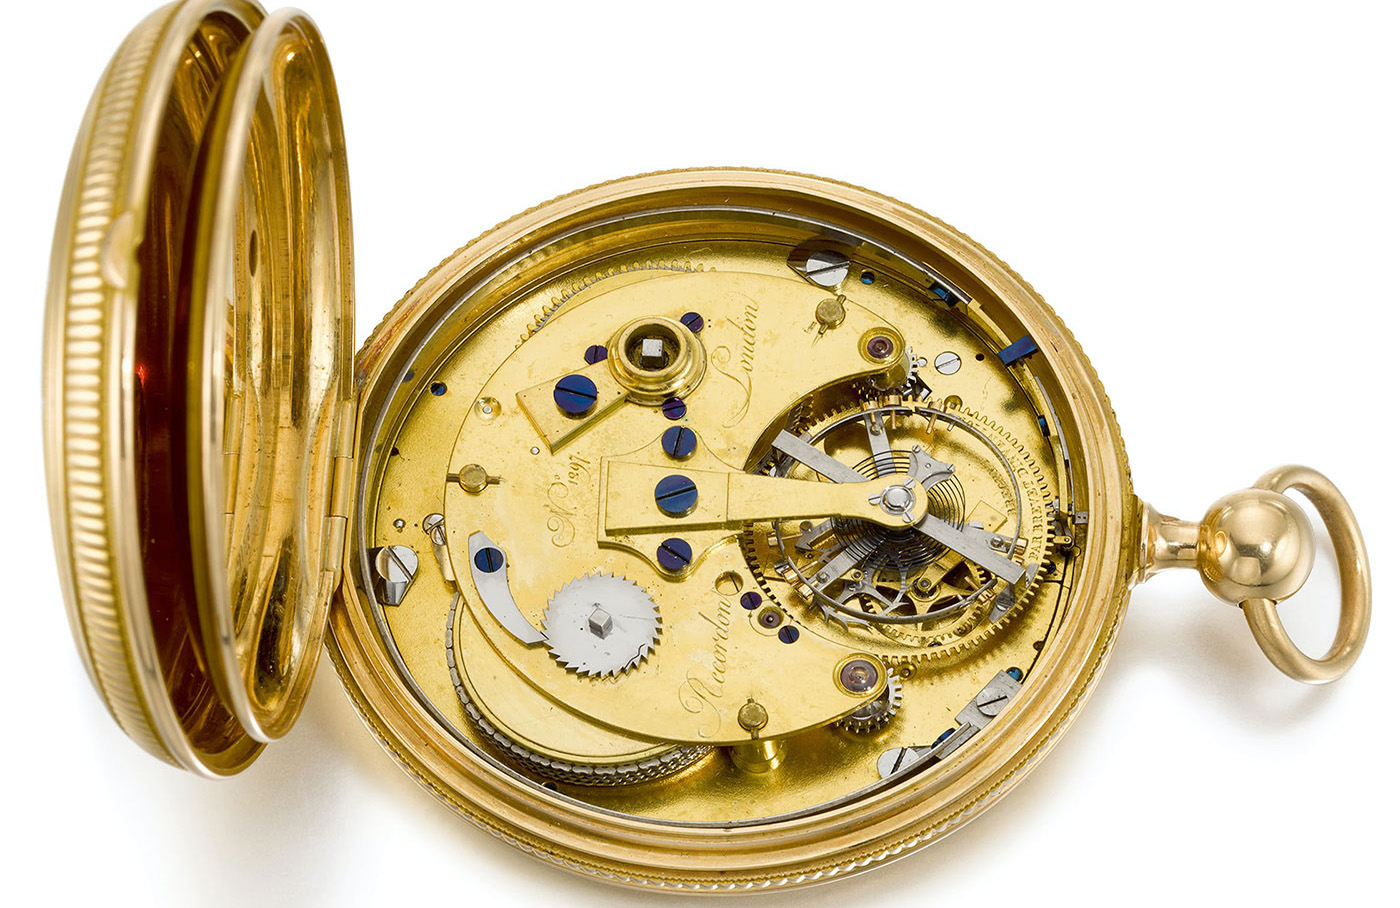 Breguet No. 1279, tourbillon watch sold to King George III, 1808.